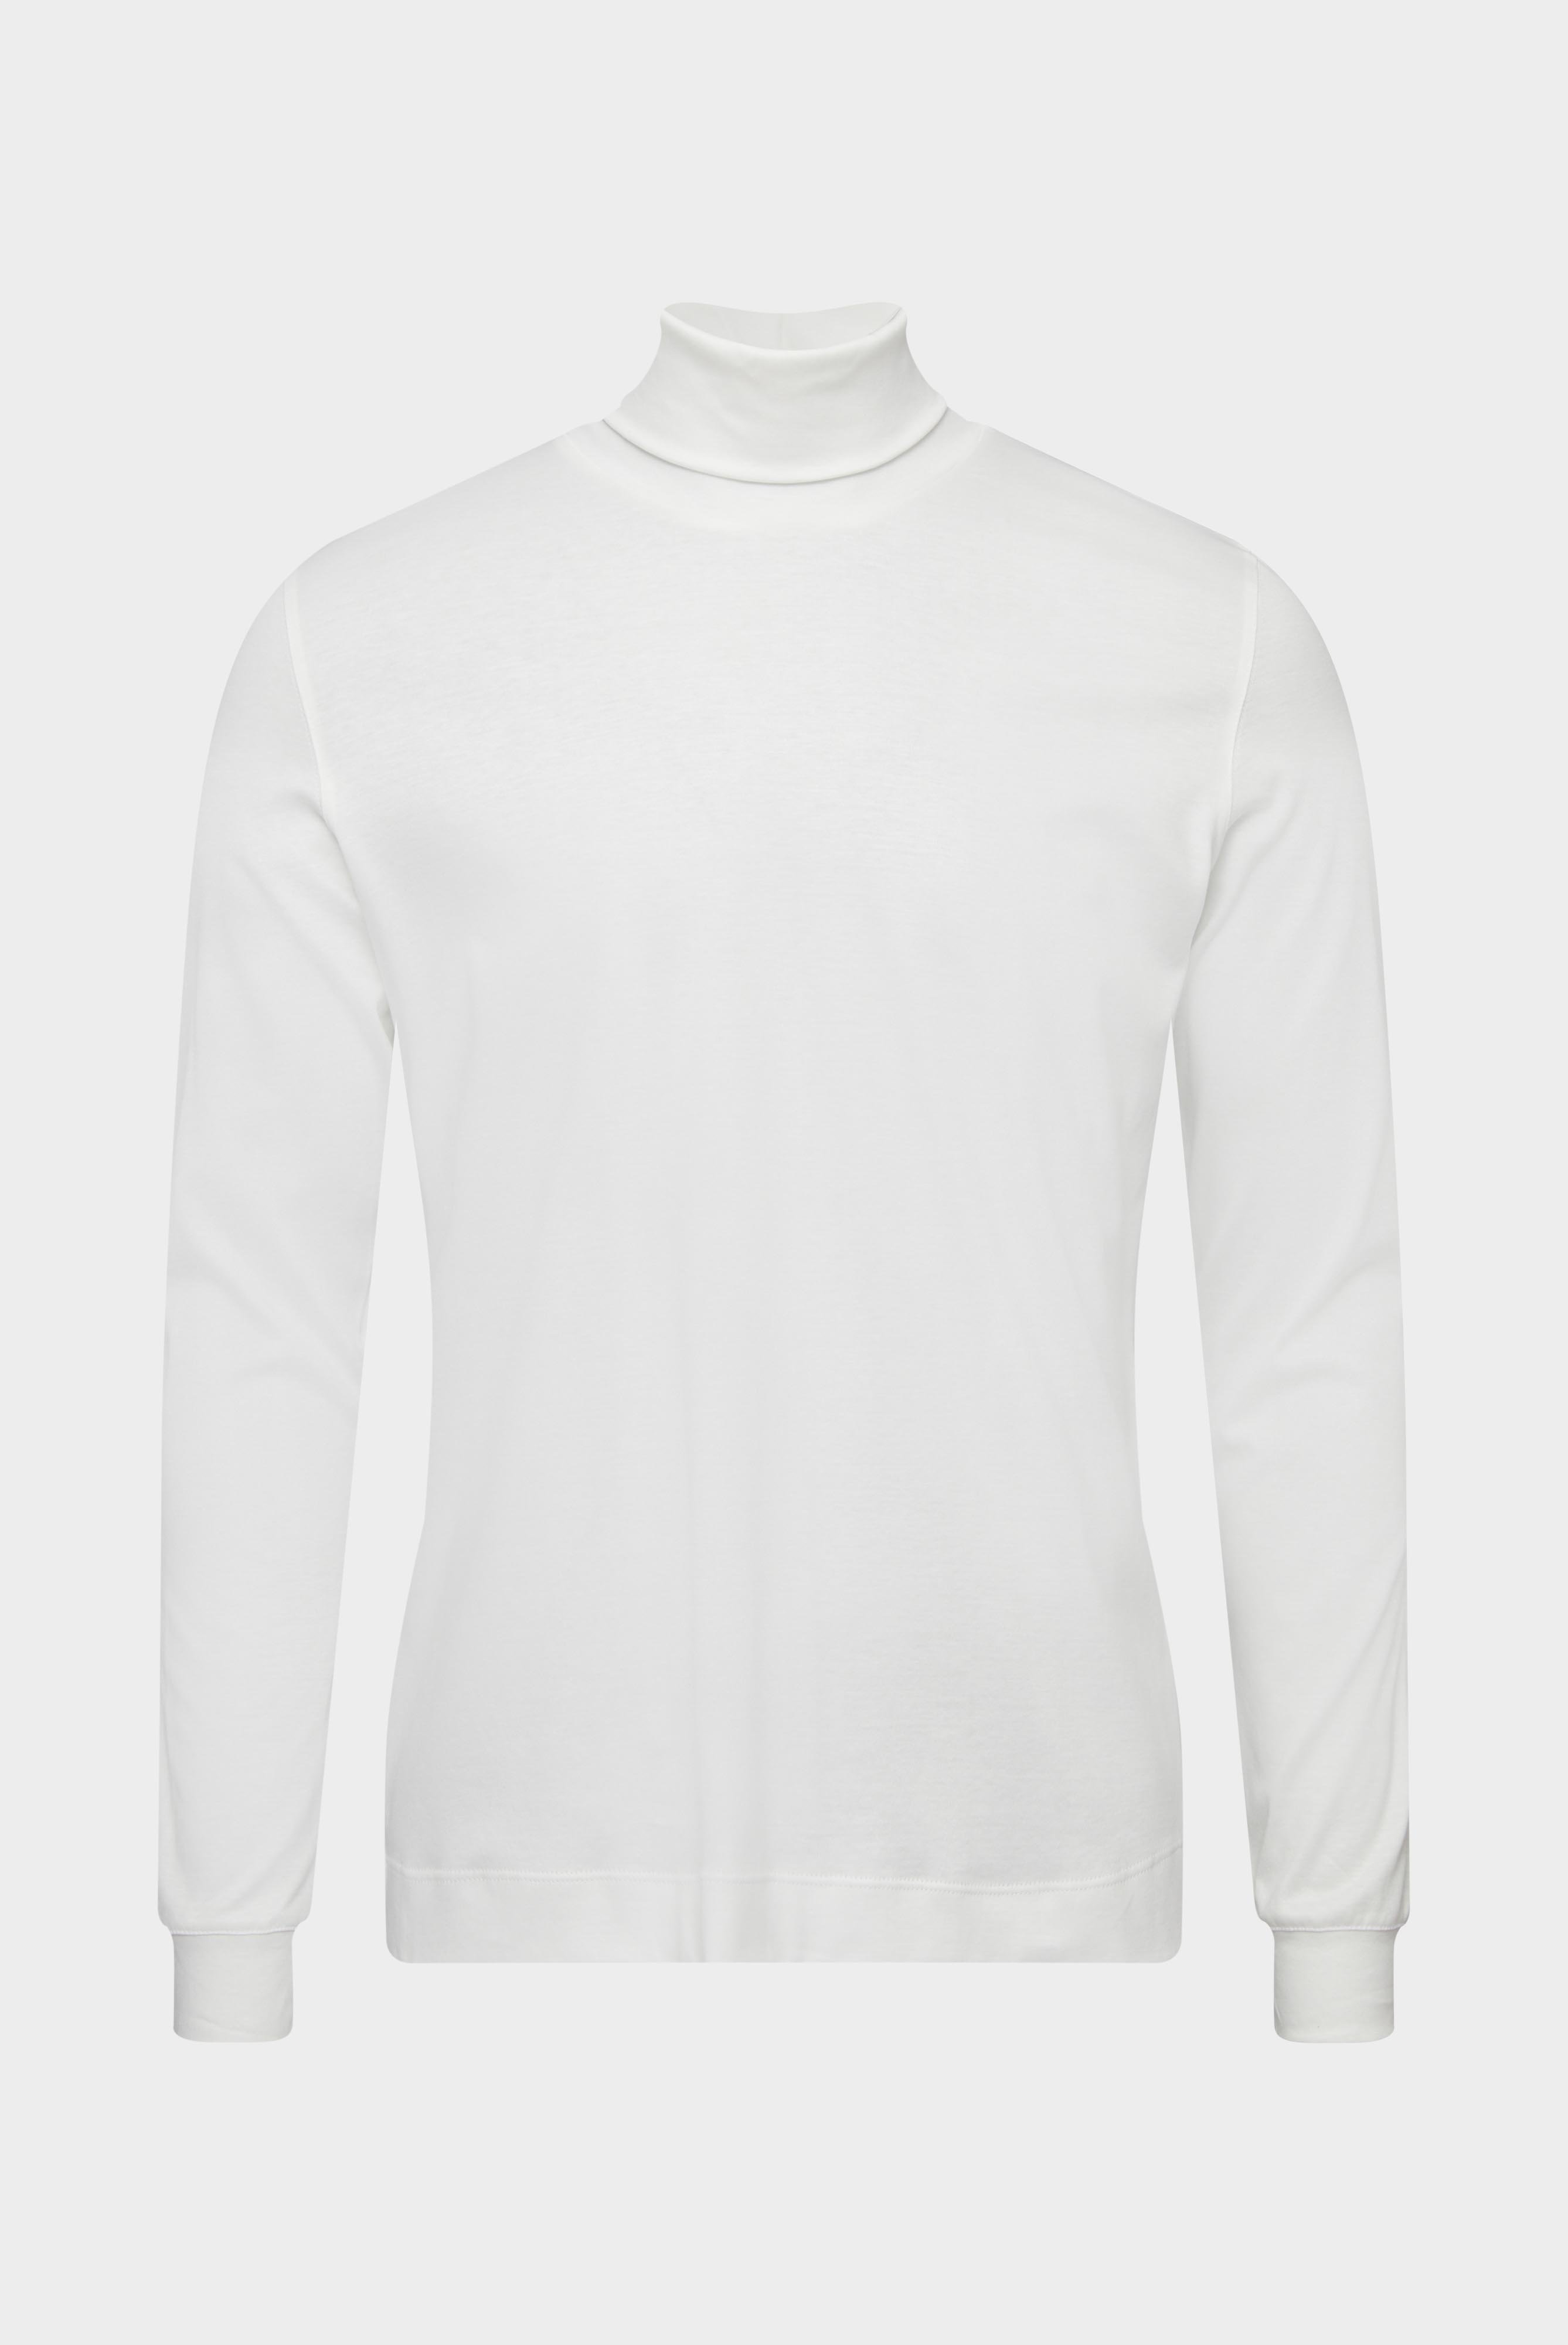 T-Shirts+Rollkragenshirt aus Jersey+20.1719.UX.180031.100.S